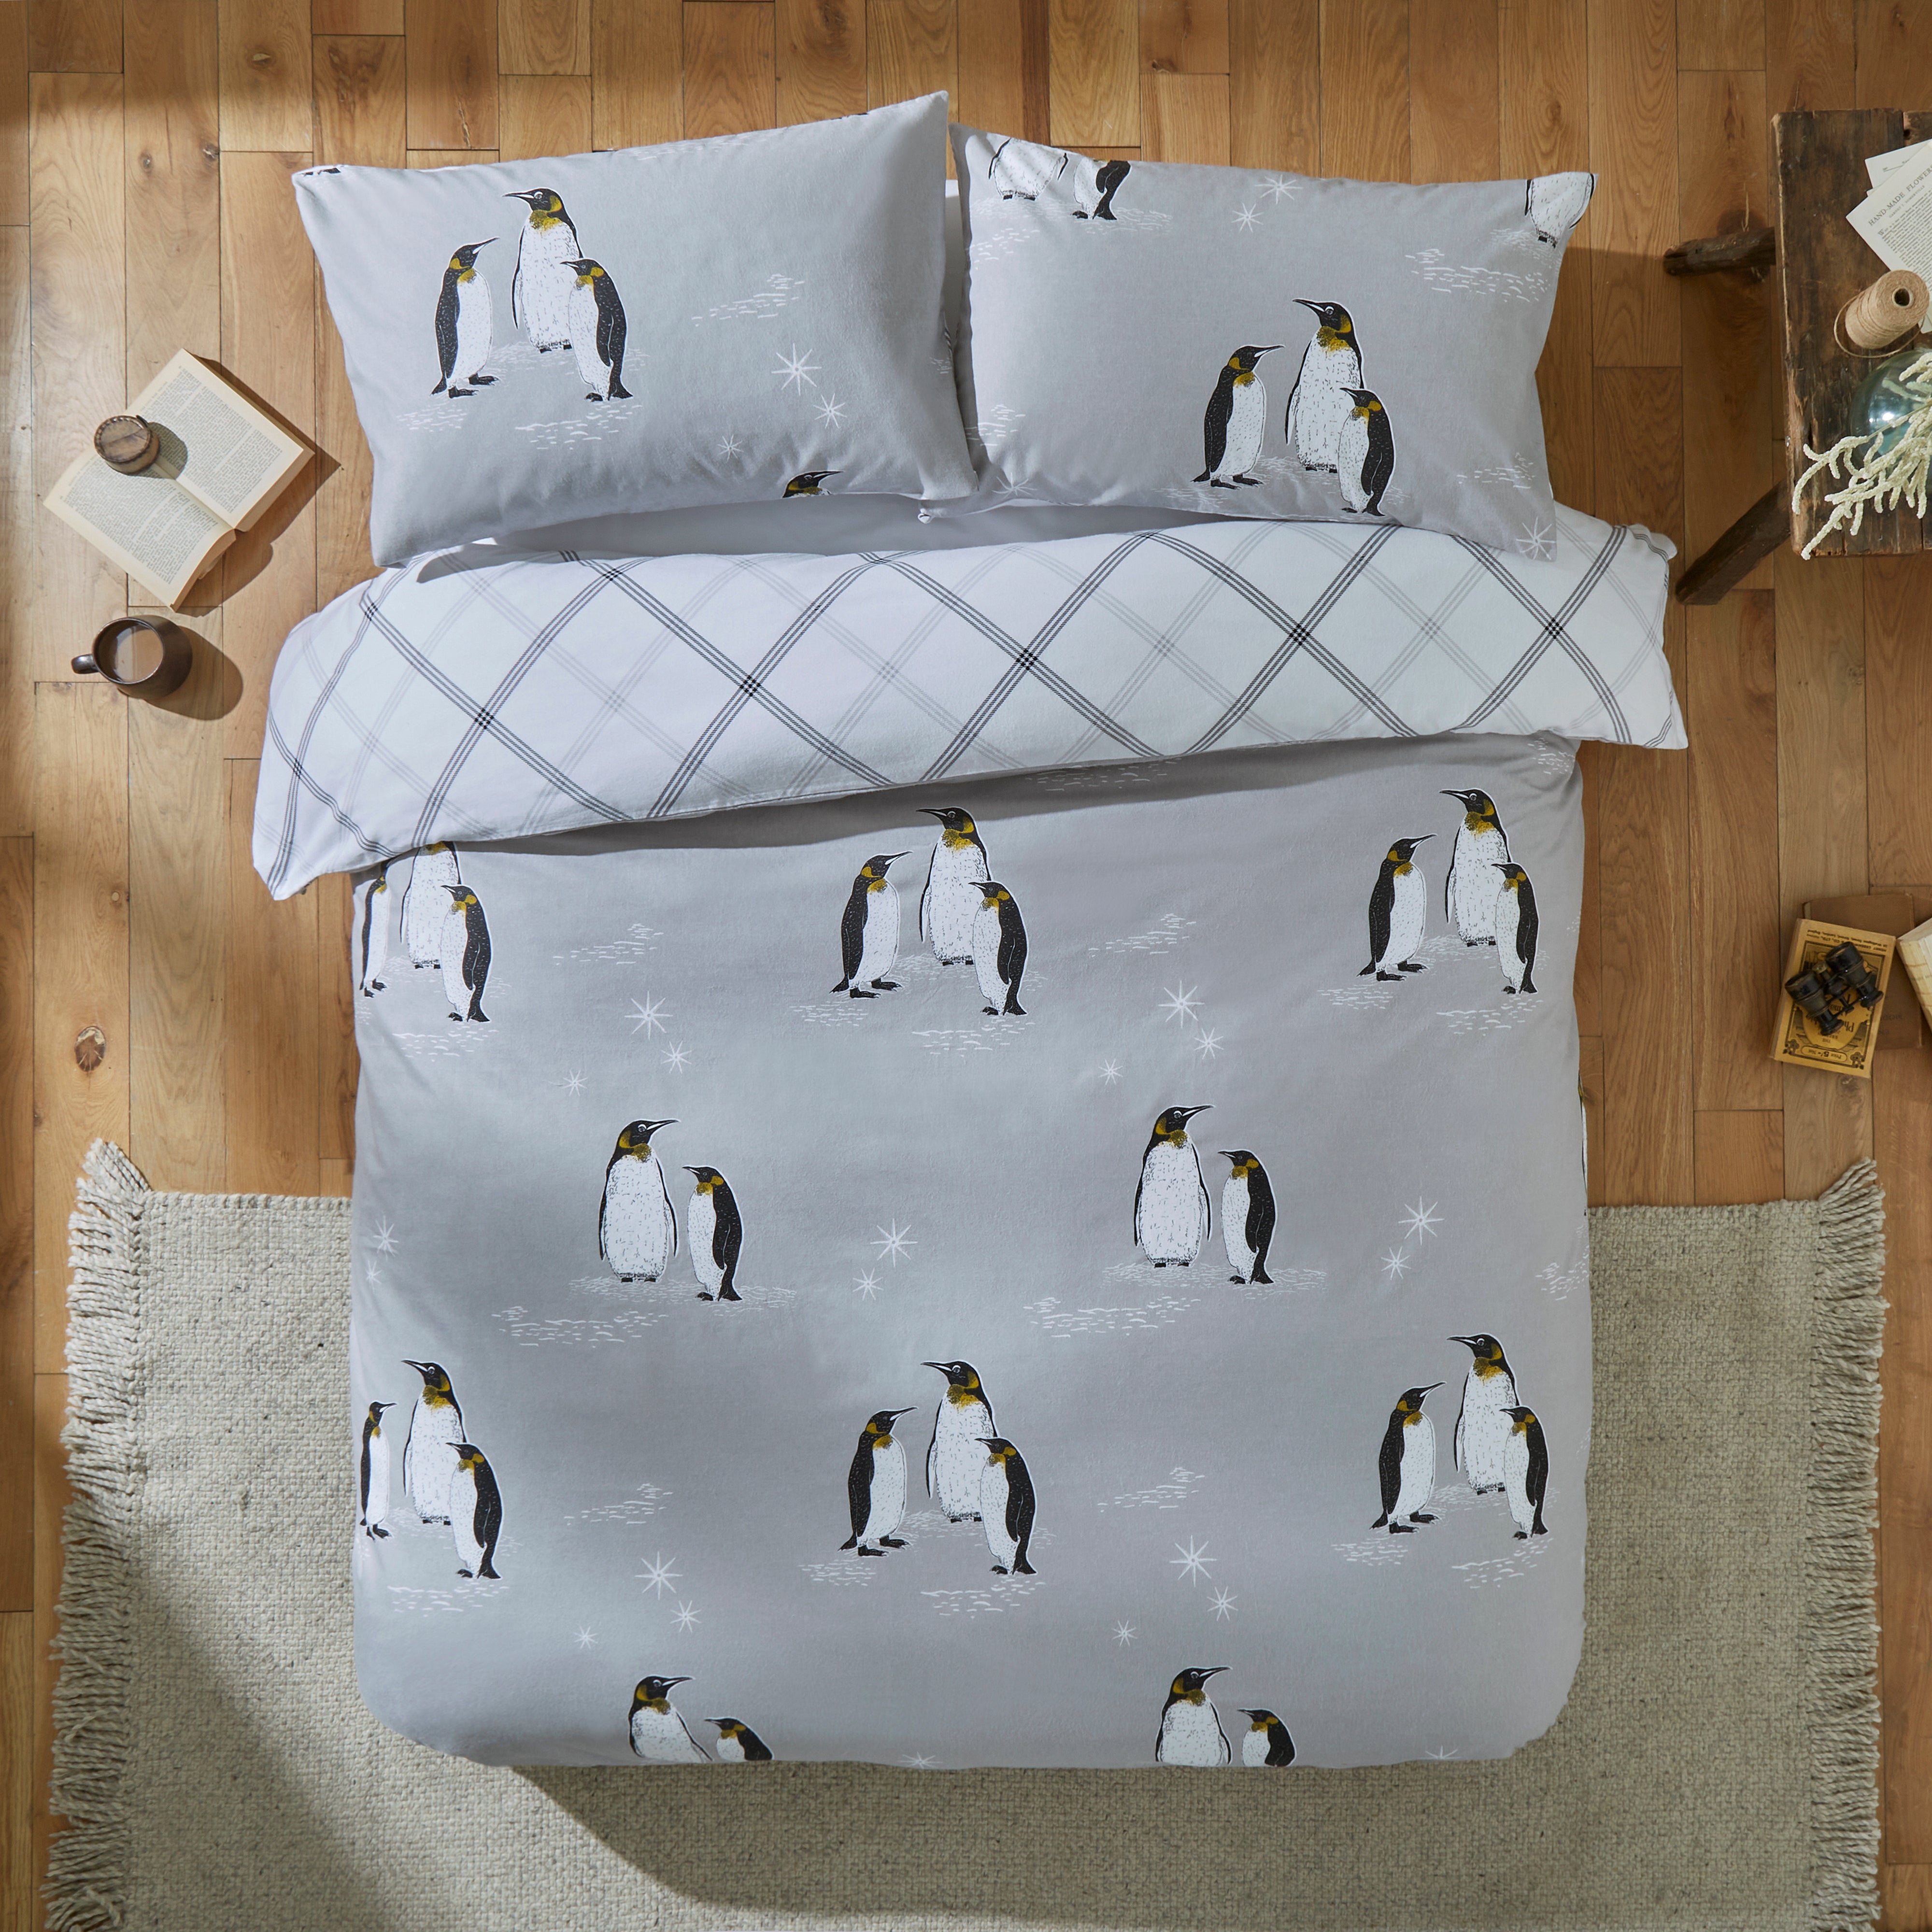 Emperor Penguins 100 Brushed Cotton Reversible Duvet Cover Pillowcase Set Grey